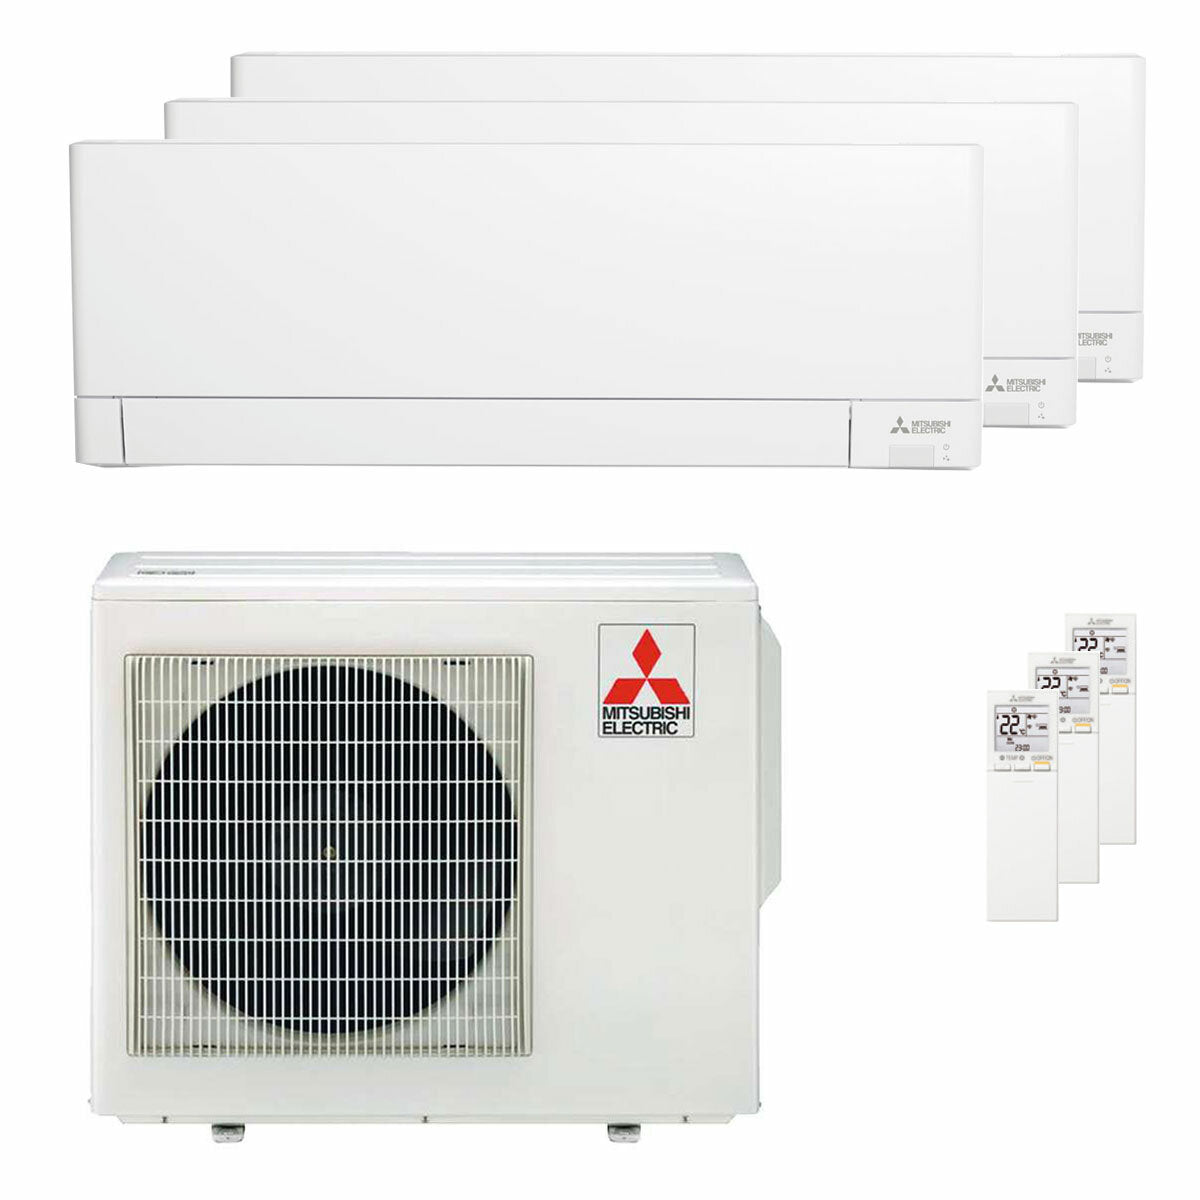 Mitsubishi Electric Air Conditioner AY Series trial split 9000+9000+12000 BTU inverter A++ wifi outdoor unit 5.4 kW